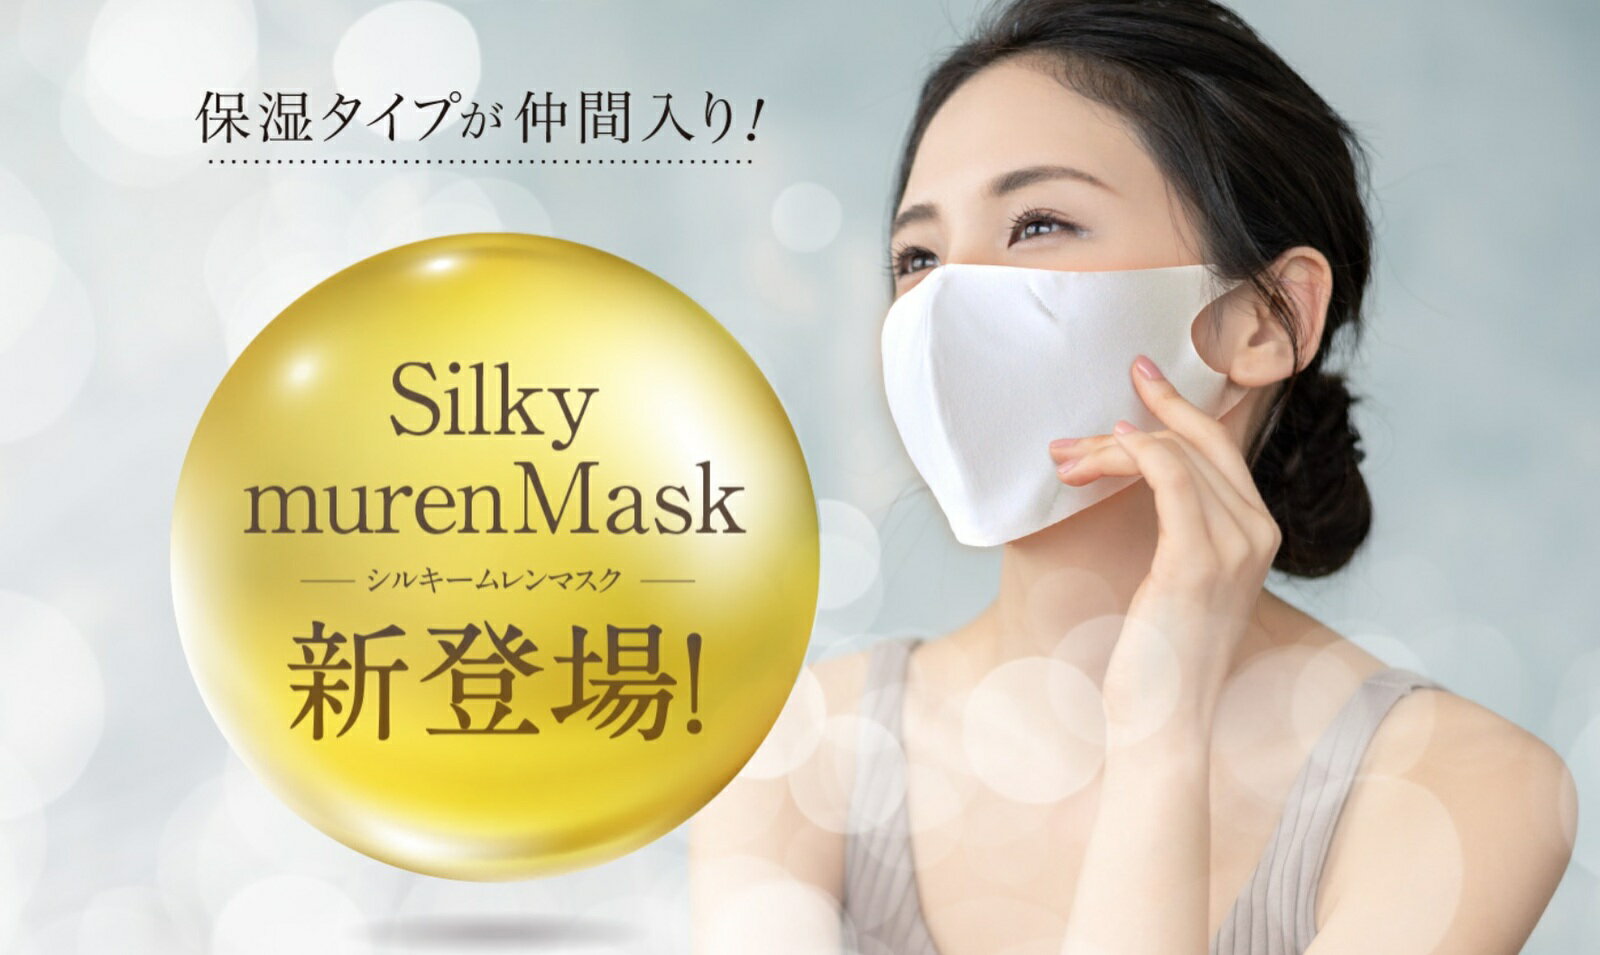 Silky murenMask【シルキームレンマスク】〜2枚のセット販売です〜【送料無料】★キッズサイズあります★